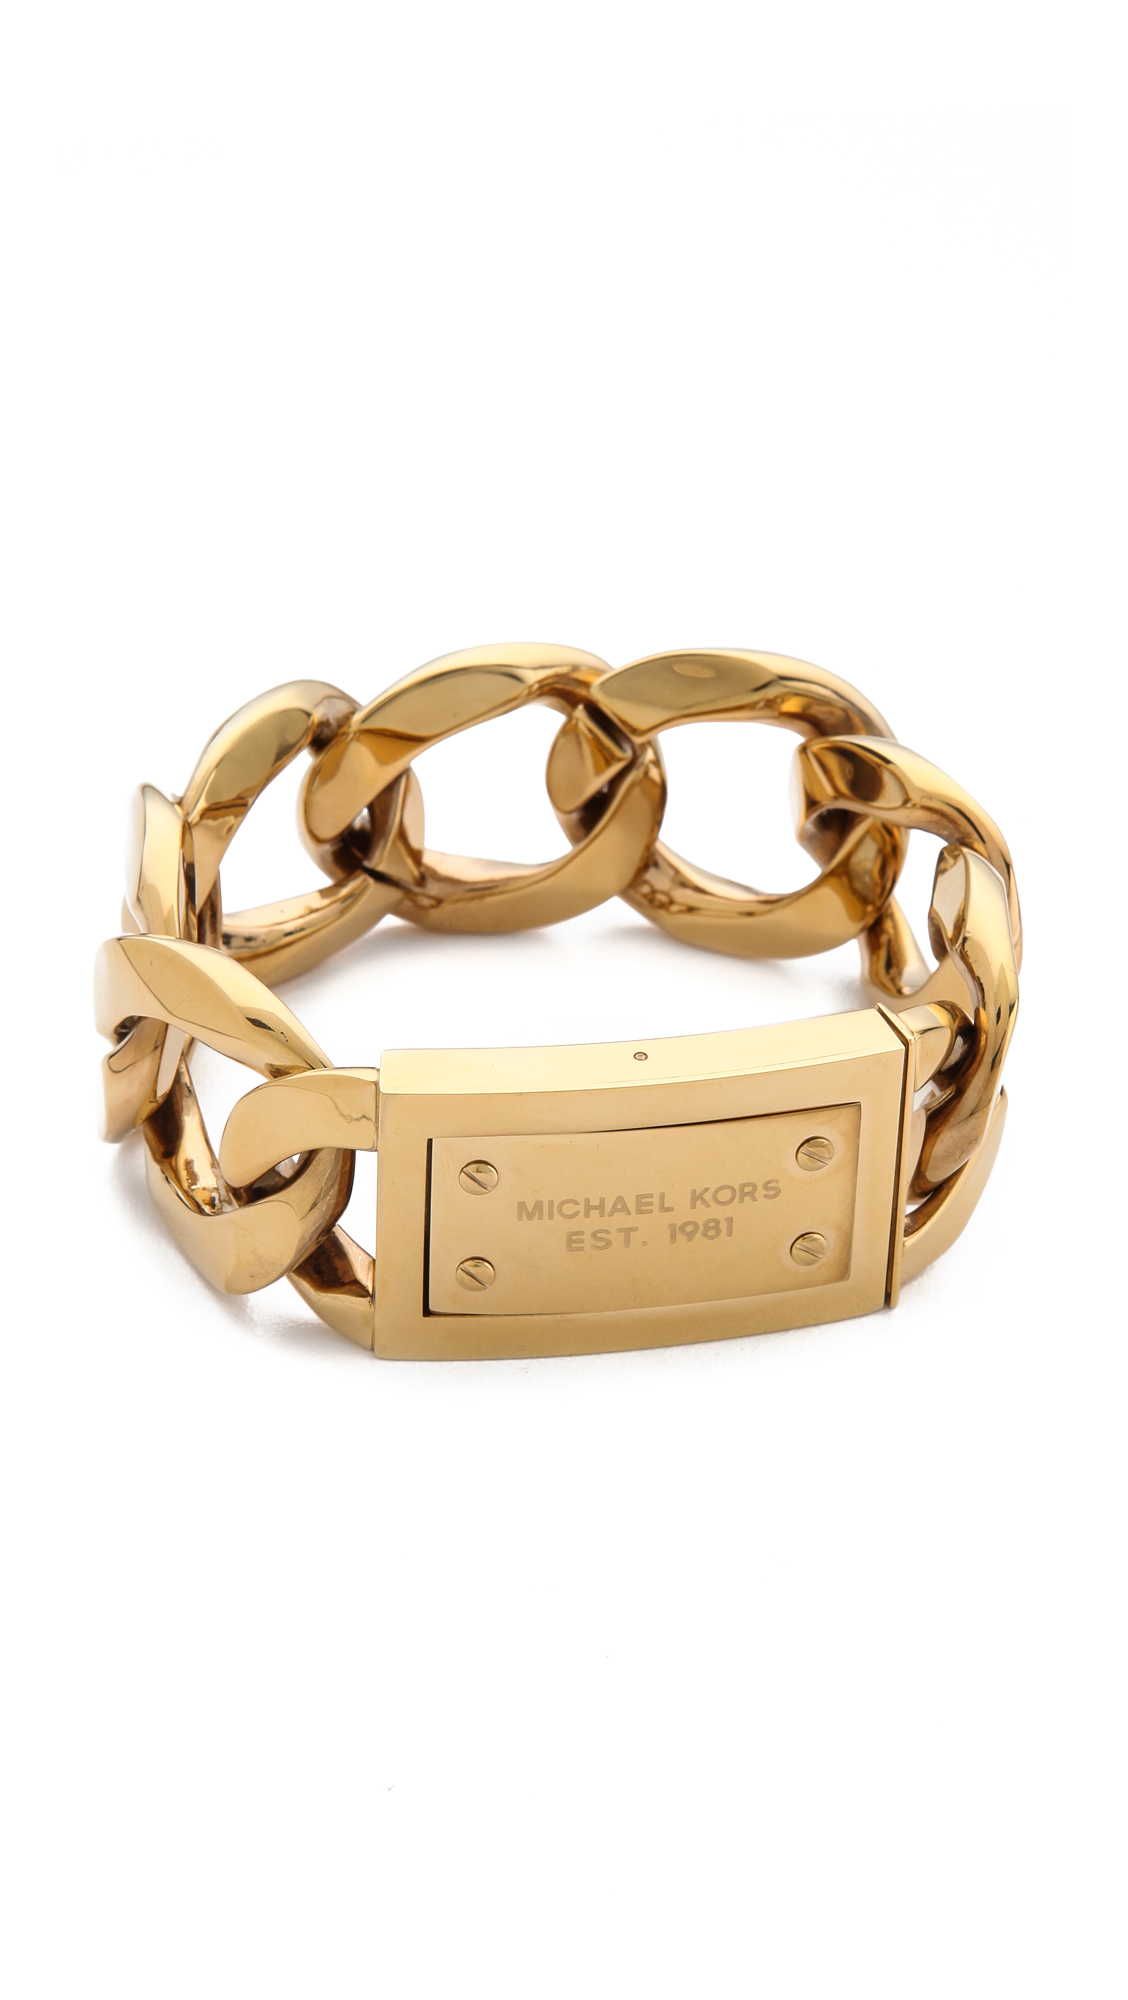 Michael Kors Large Curb Chain Bracelet in Gold (Metallic) - Lyst